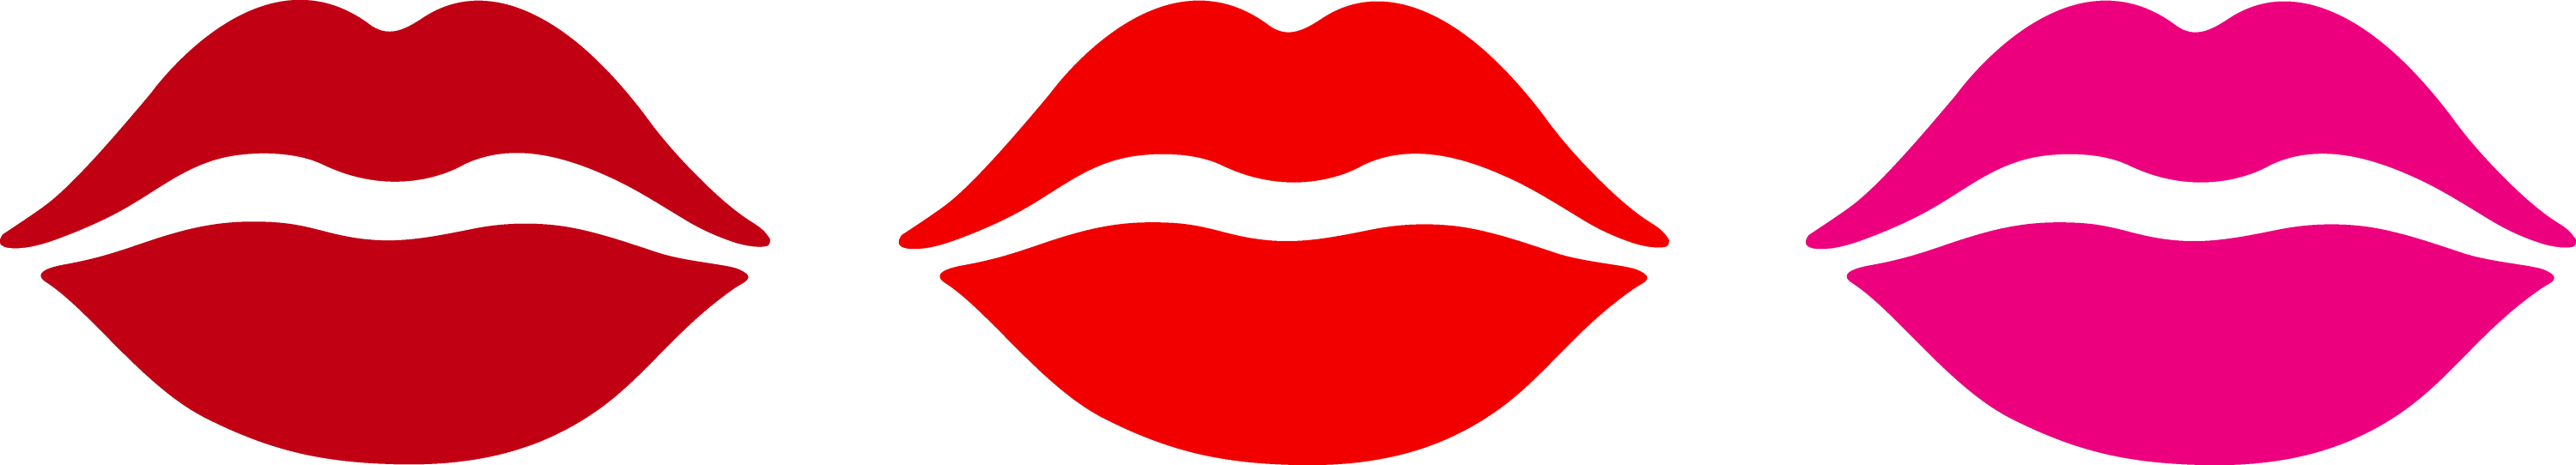 clipart red lipstick kiss - photo #10